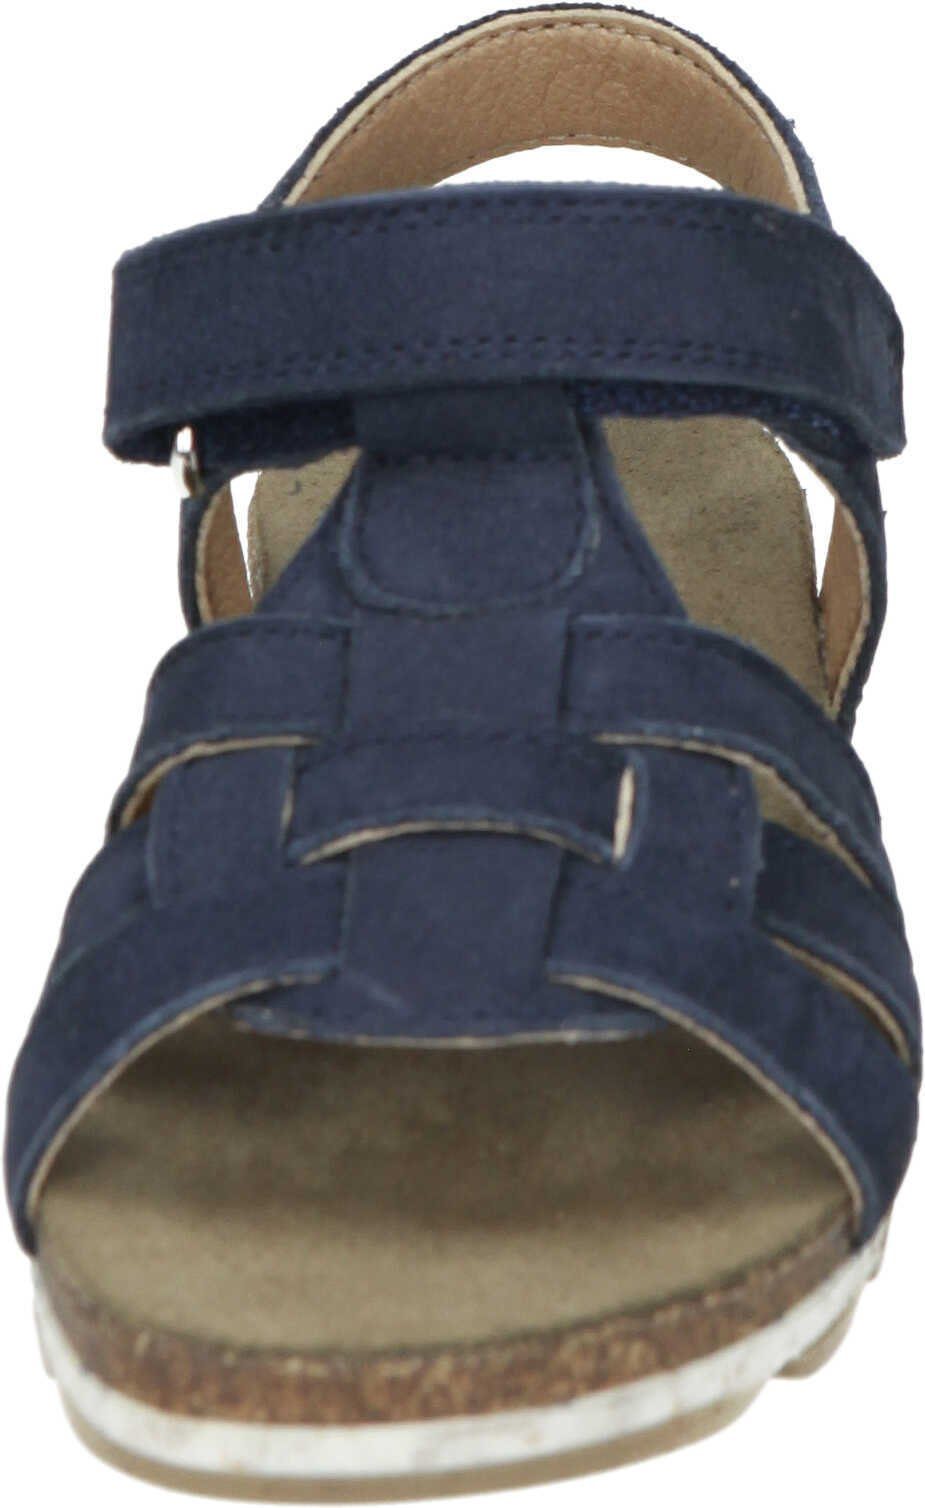 Vado Sandaletten Sandalette aus blau Nubukleder